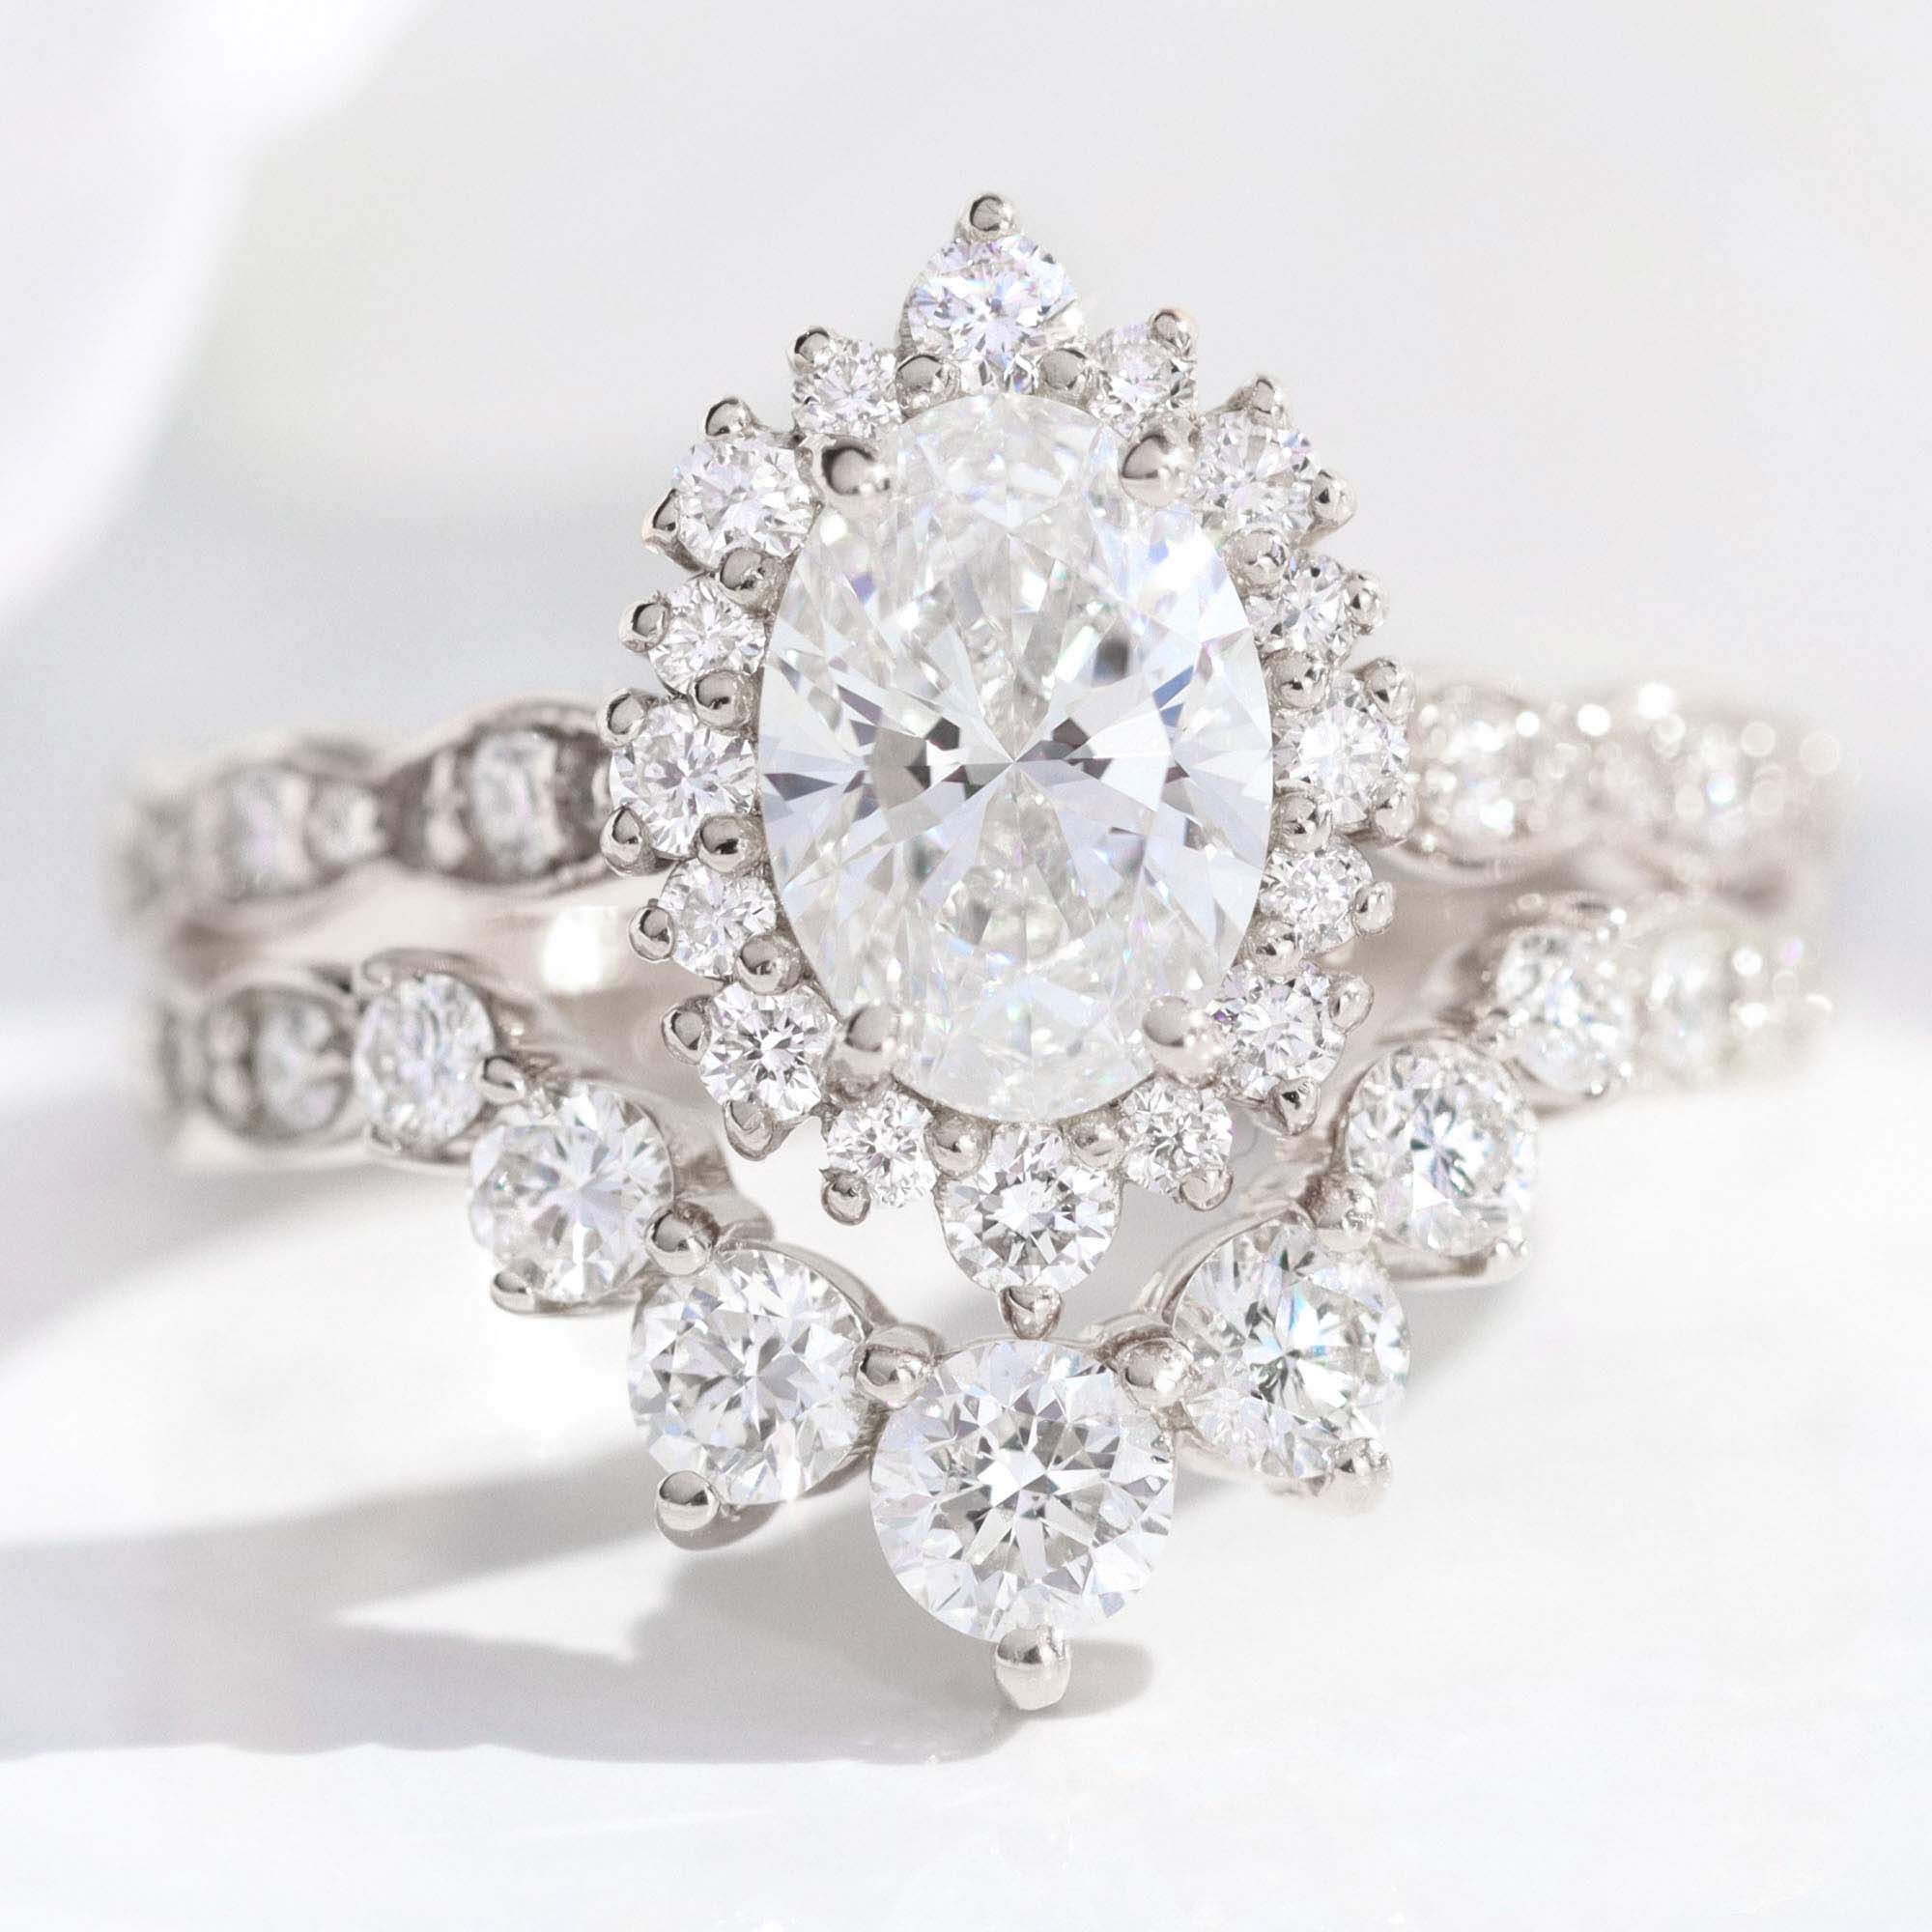 lab diamond ring stack white gold oval diamond halo engagement ring set La More Design Jewelry